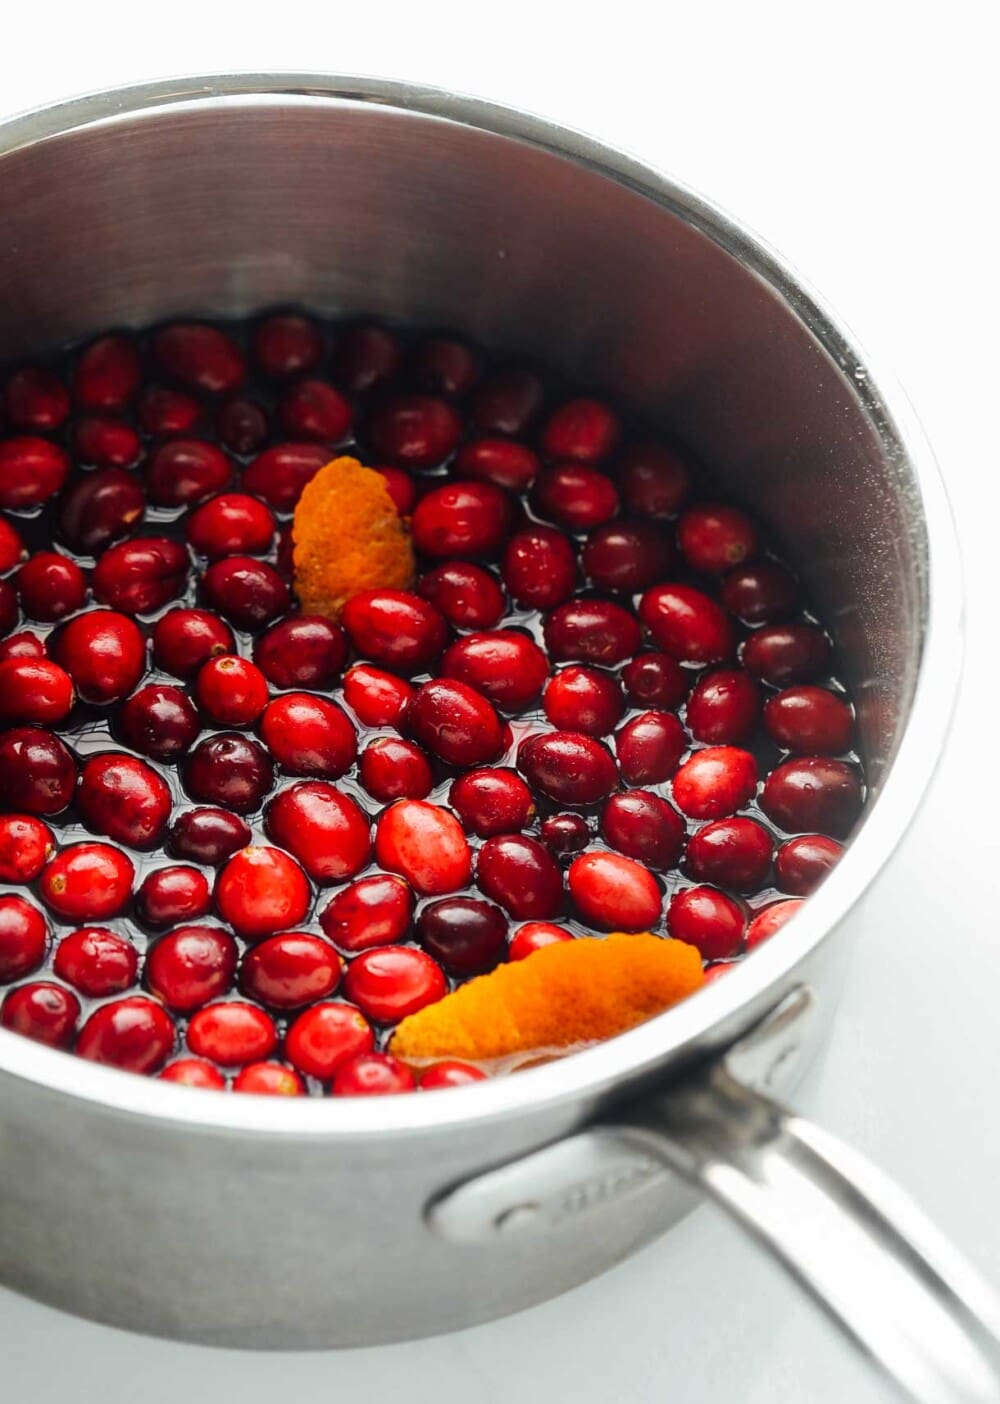 cranberries and orange peel in stainless steel pot